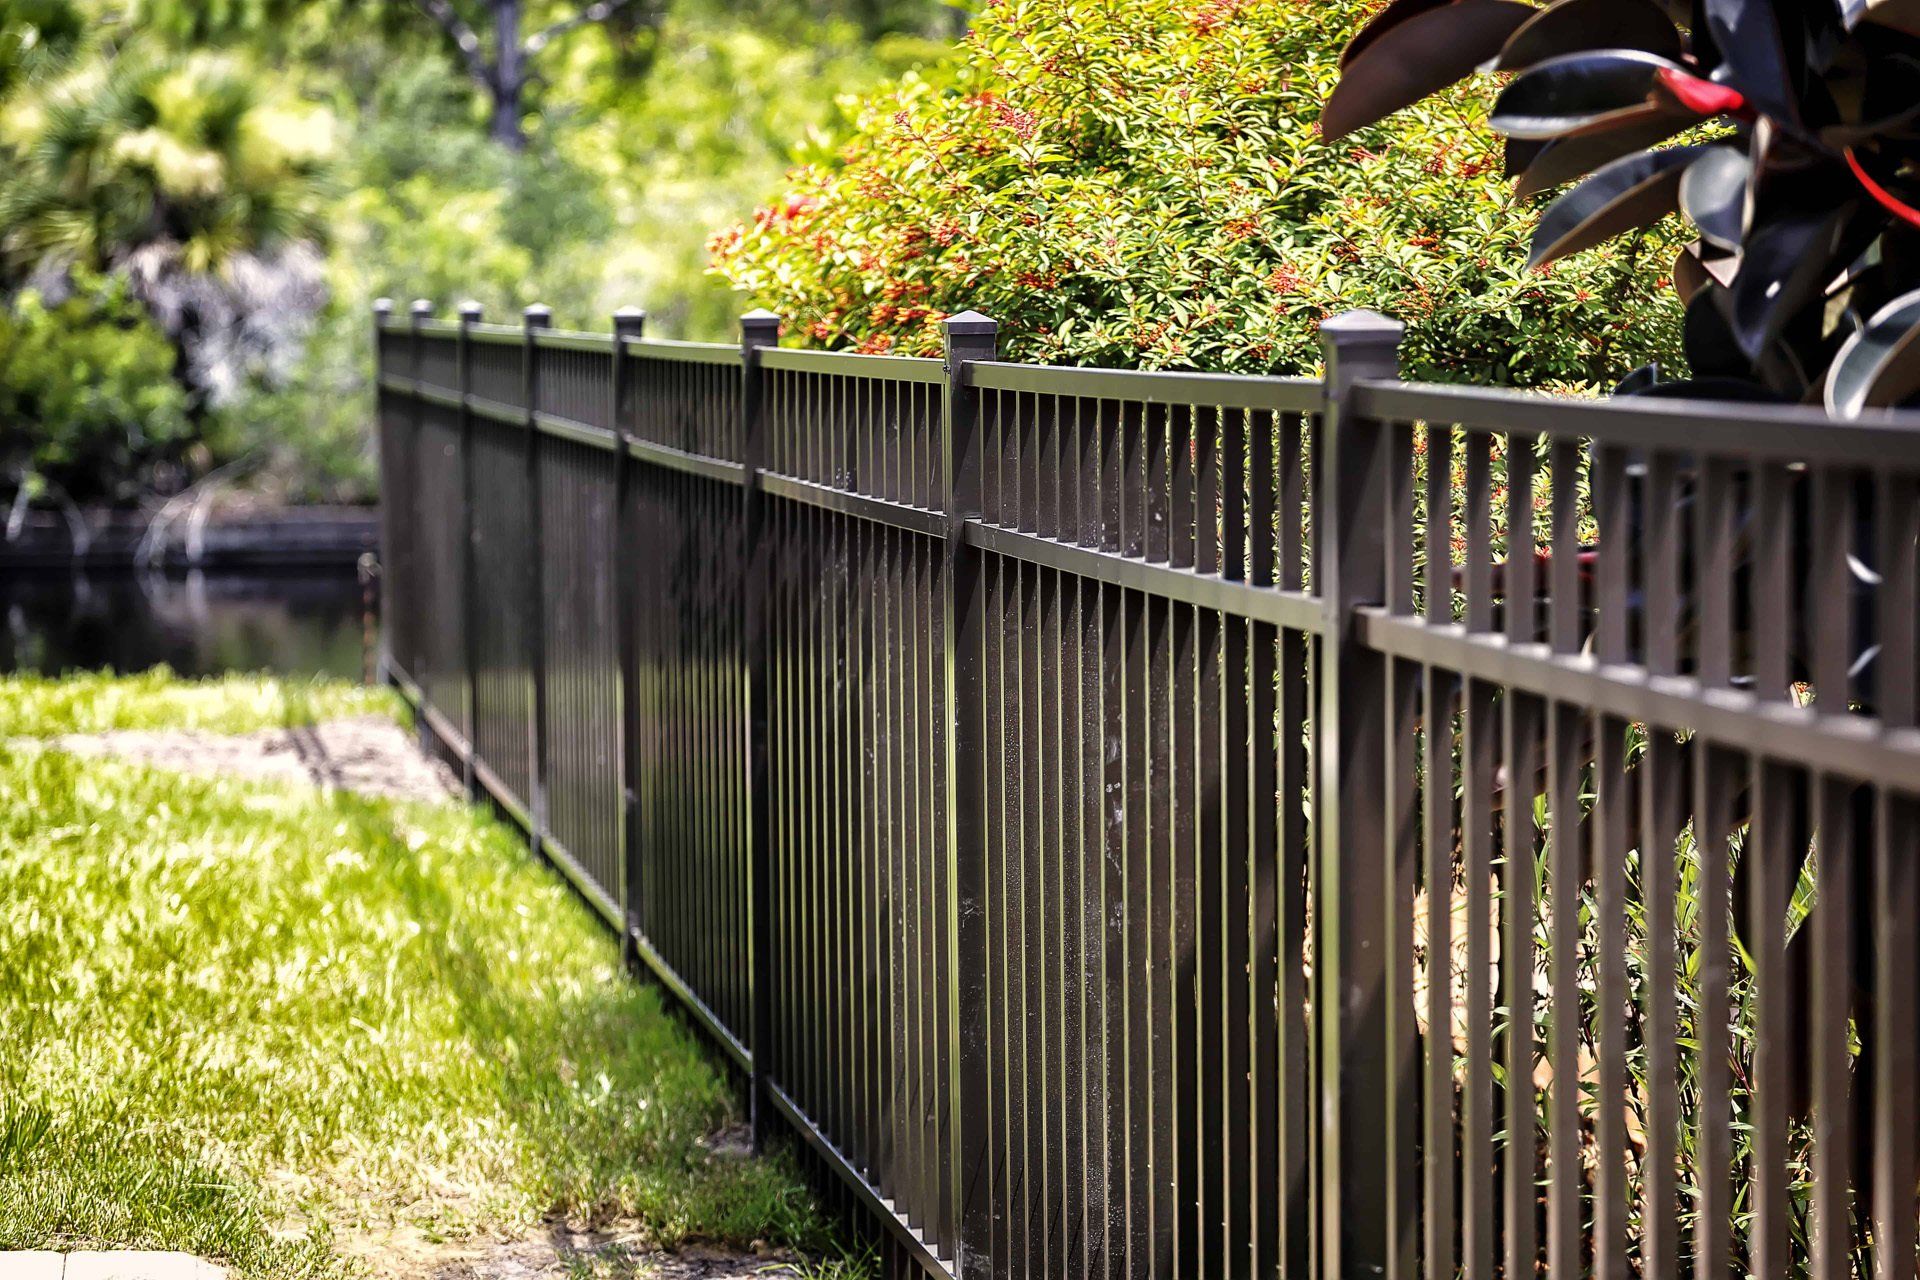 Contact fence company birmingham al